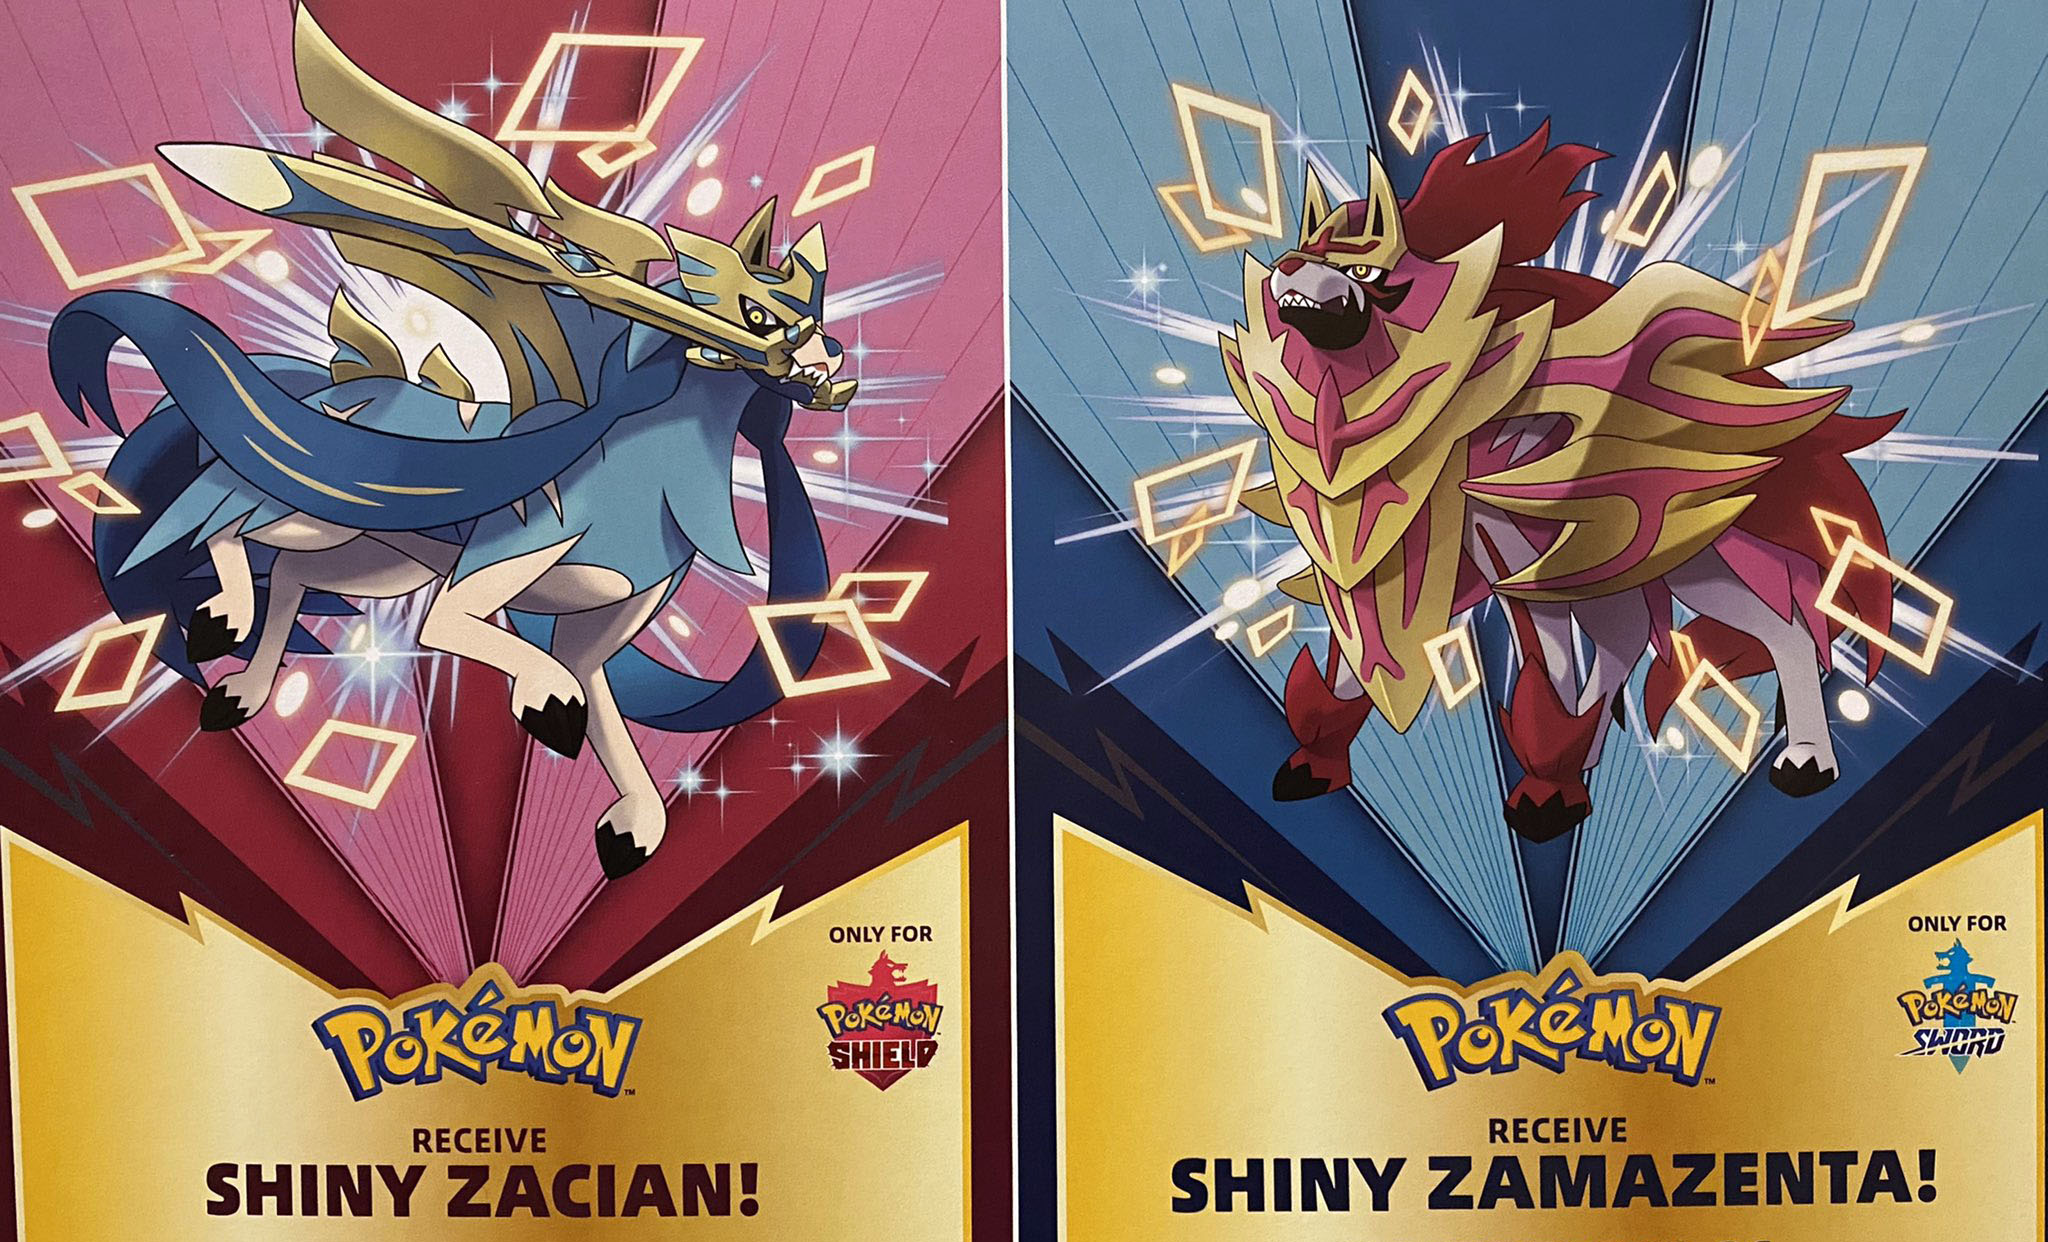 Shiny Zacian and Zamazenta Events at Gamestop! 